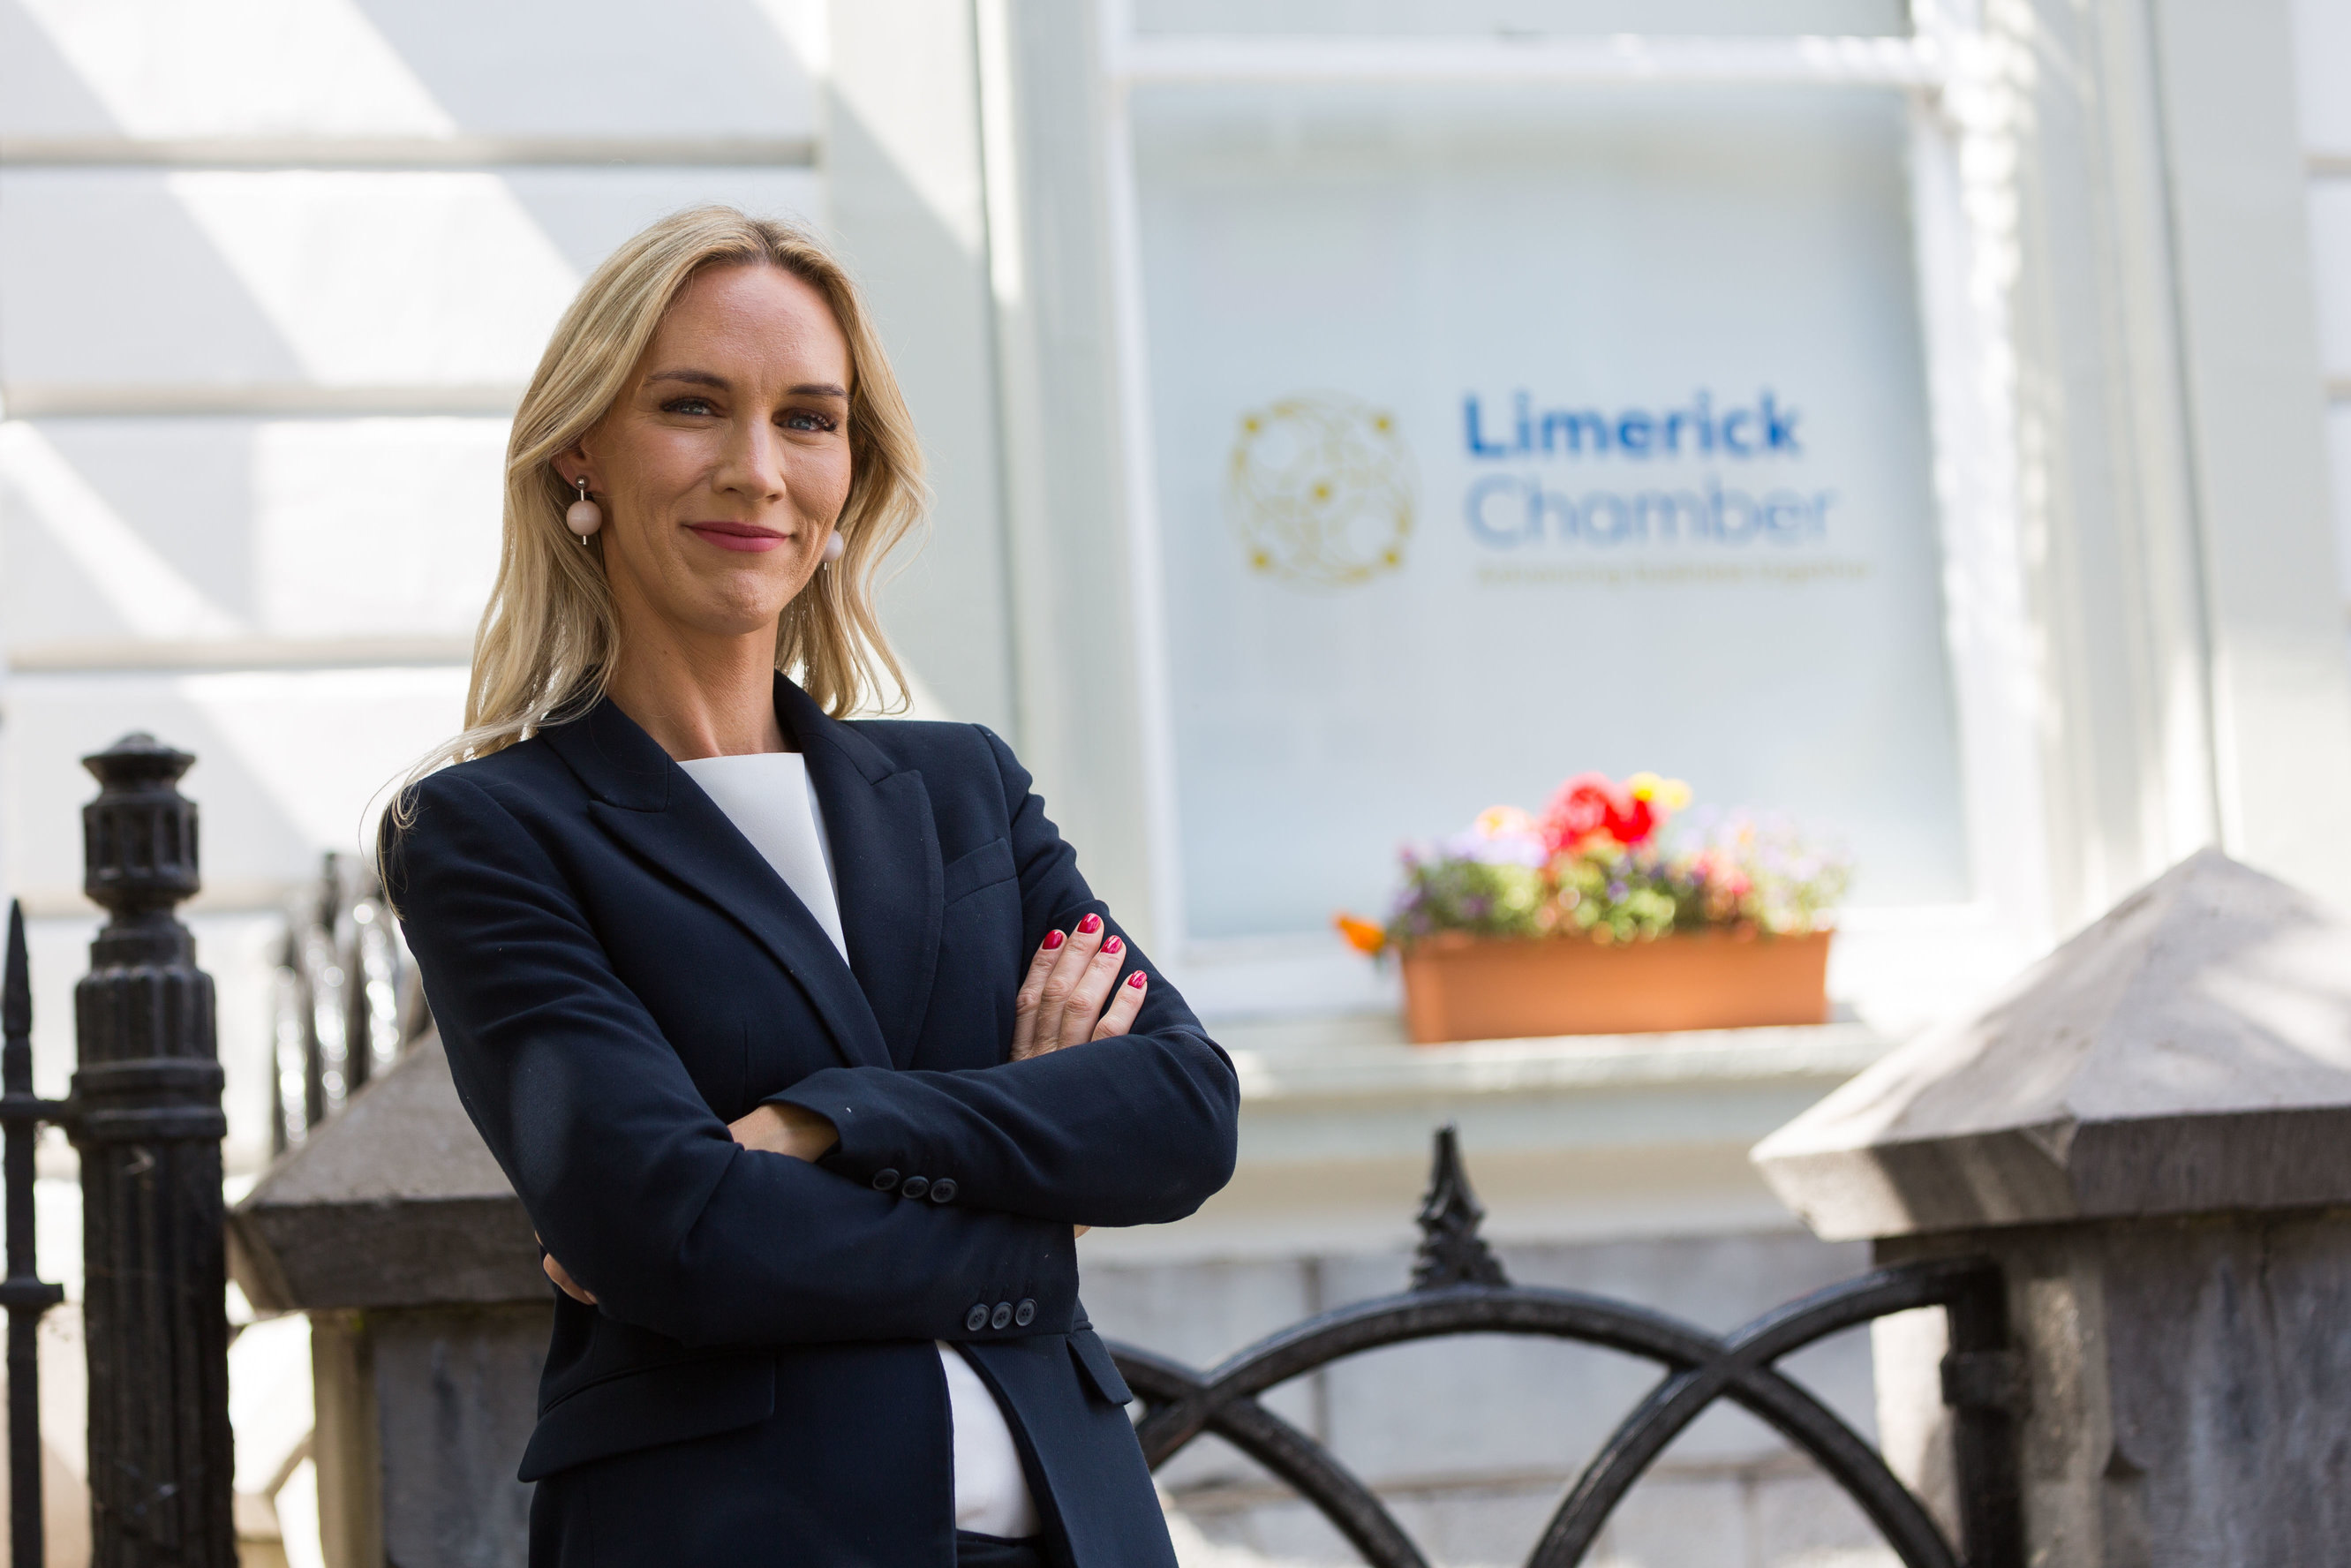 Limerick Chamber CEO Dee Ryan